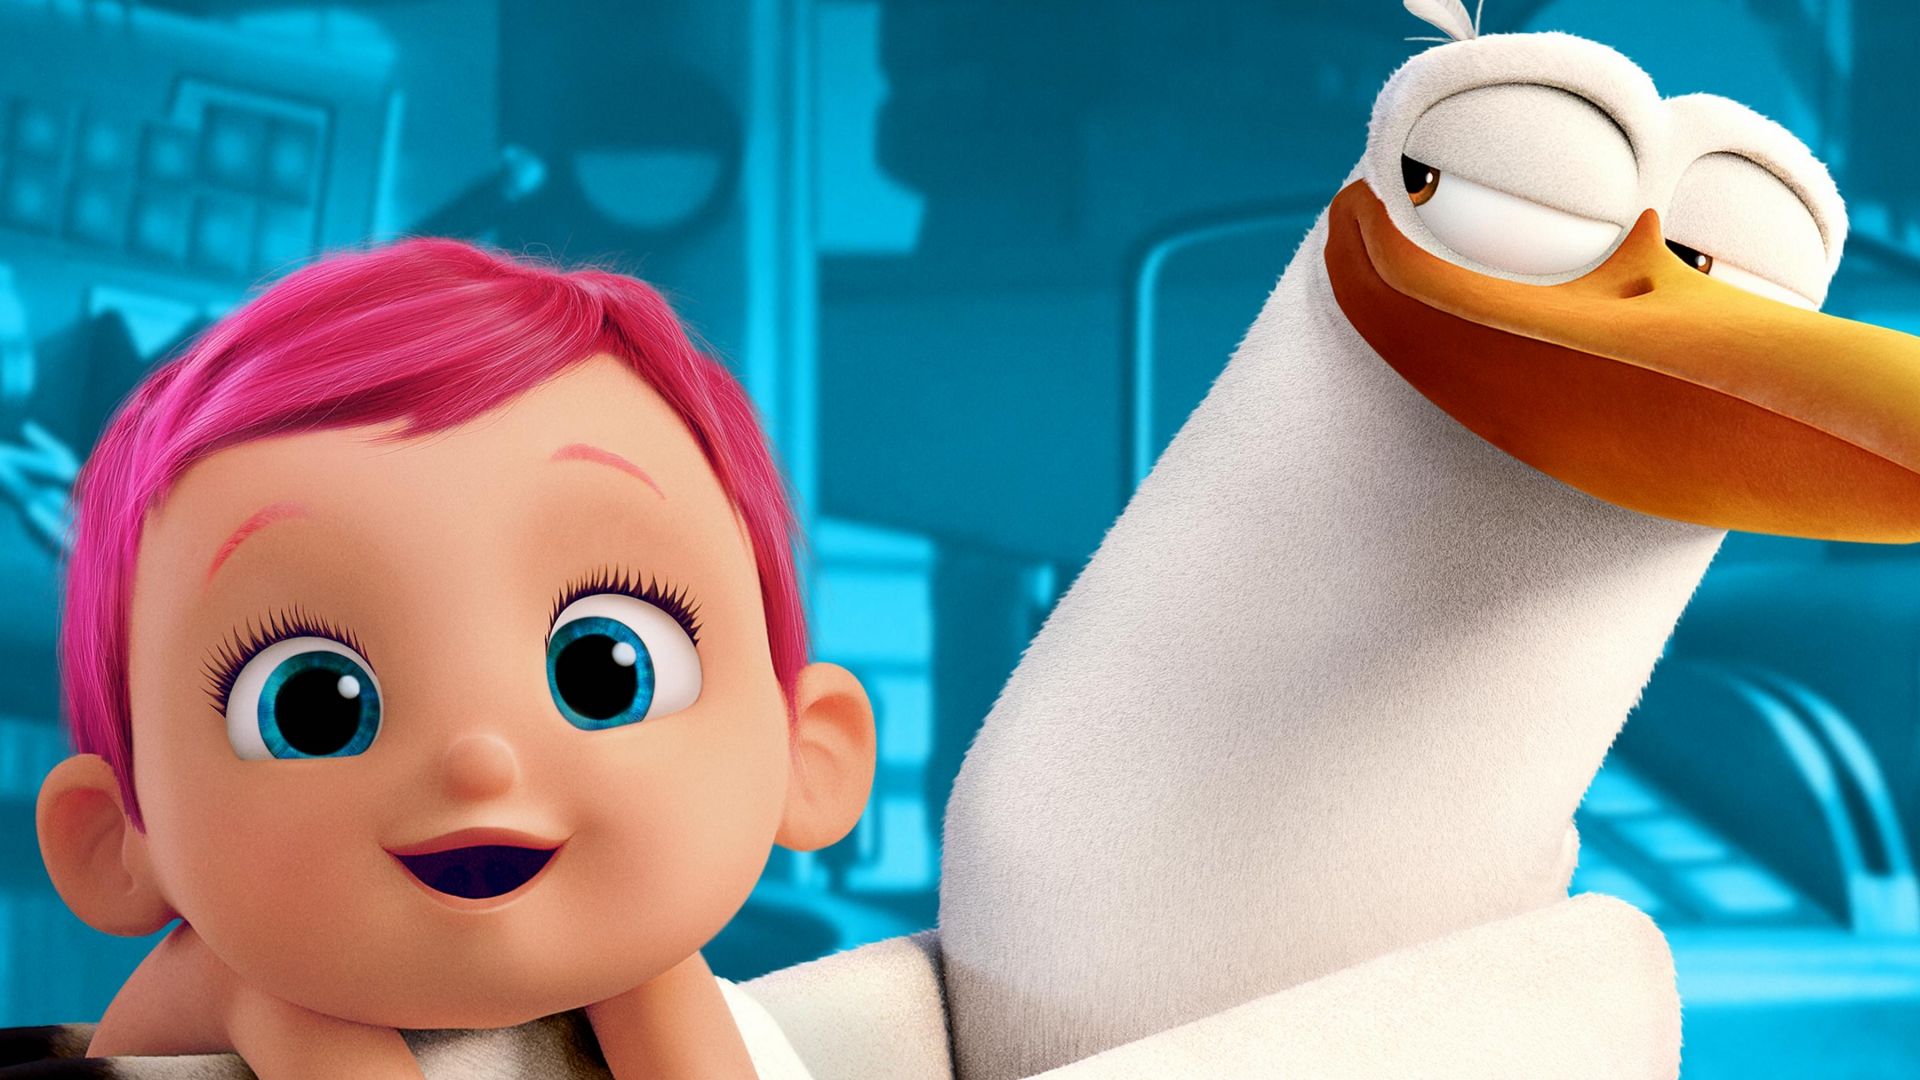 Аисты, ребенок, лучшие мультфильмы 2016, Storks, baby, best animation movies of 2016 (horizontal)